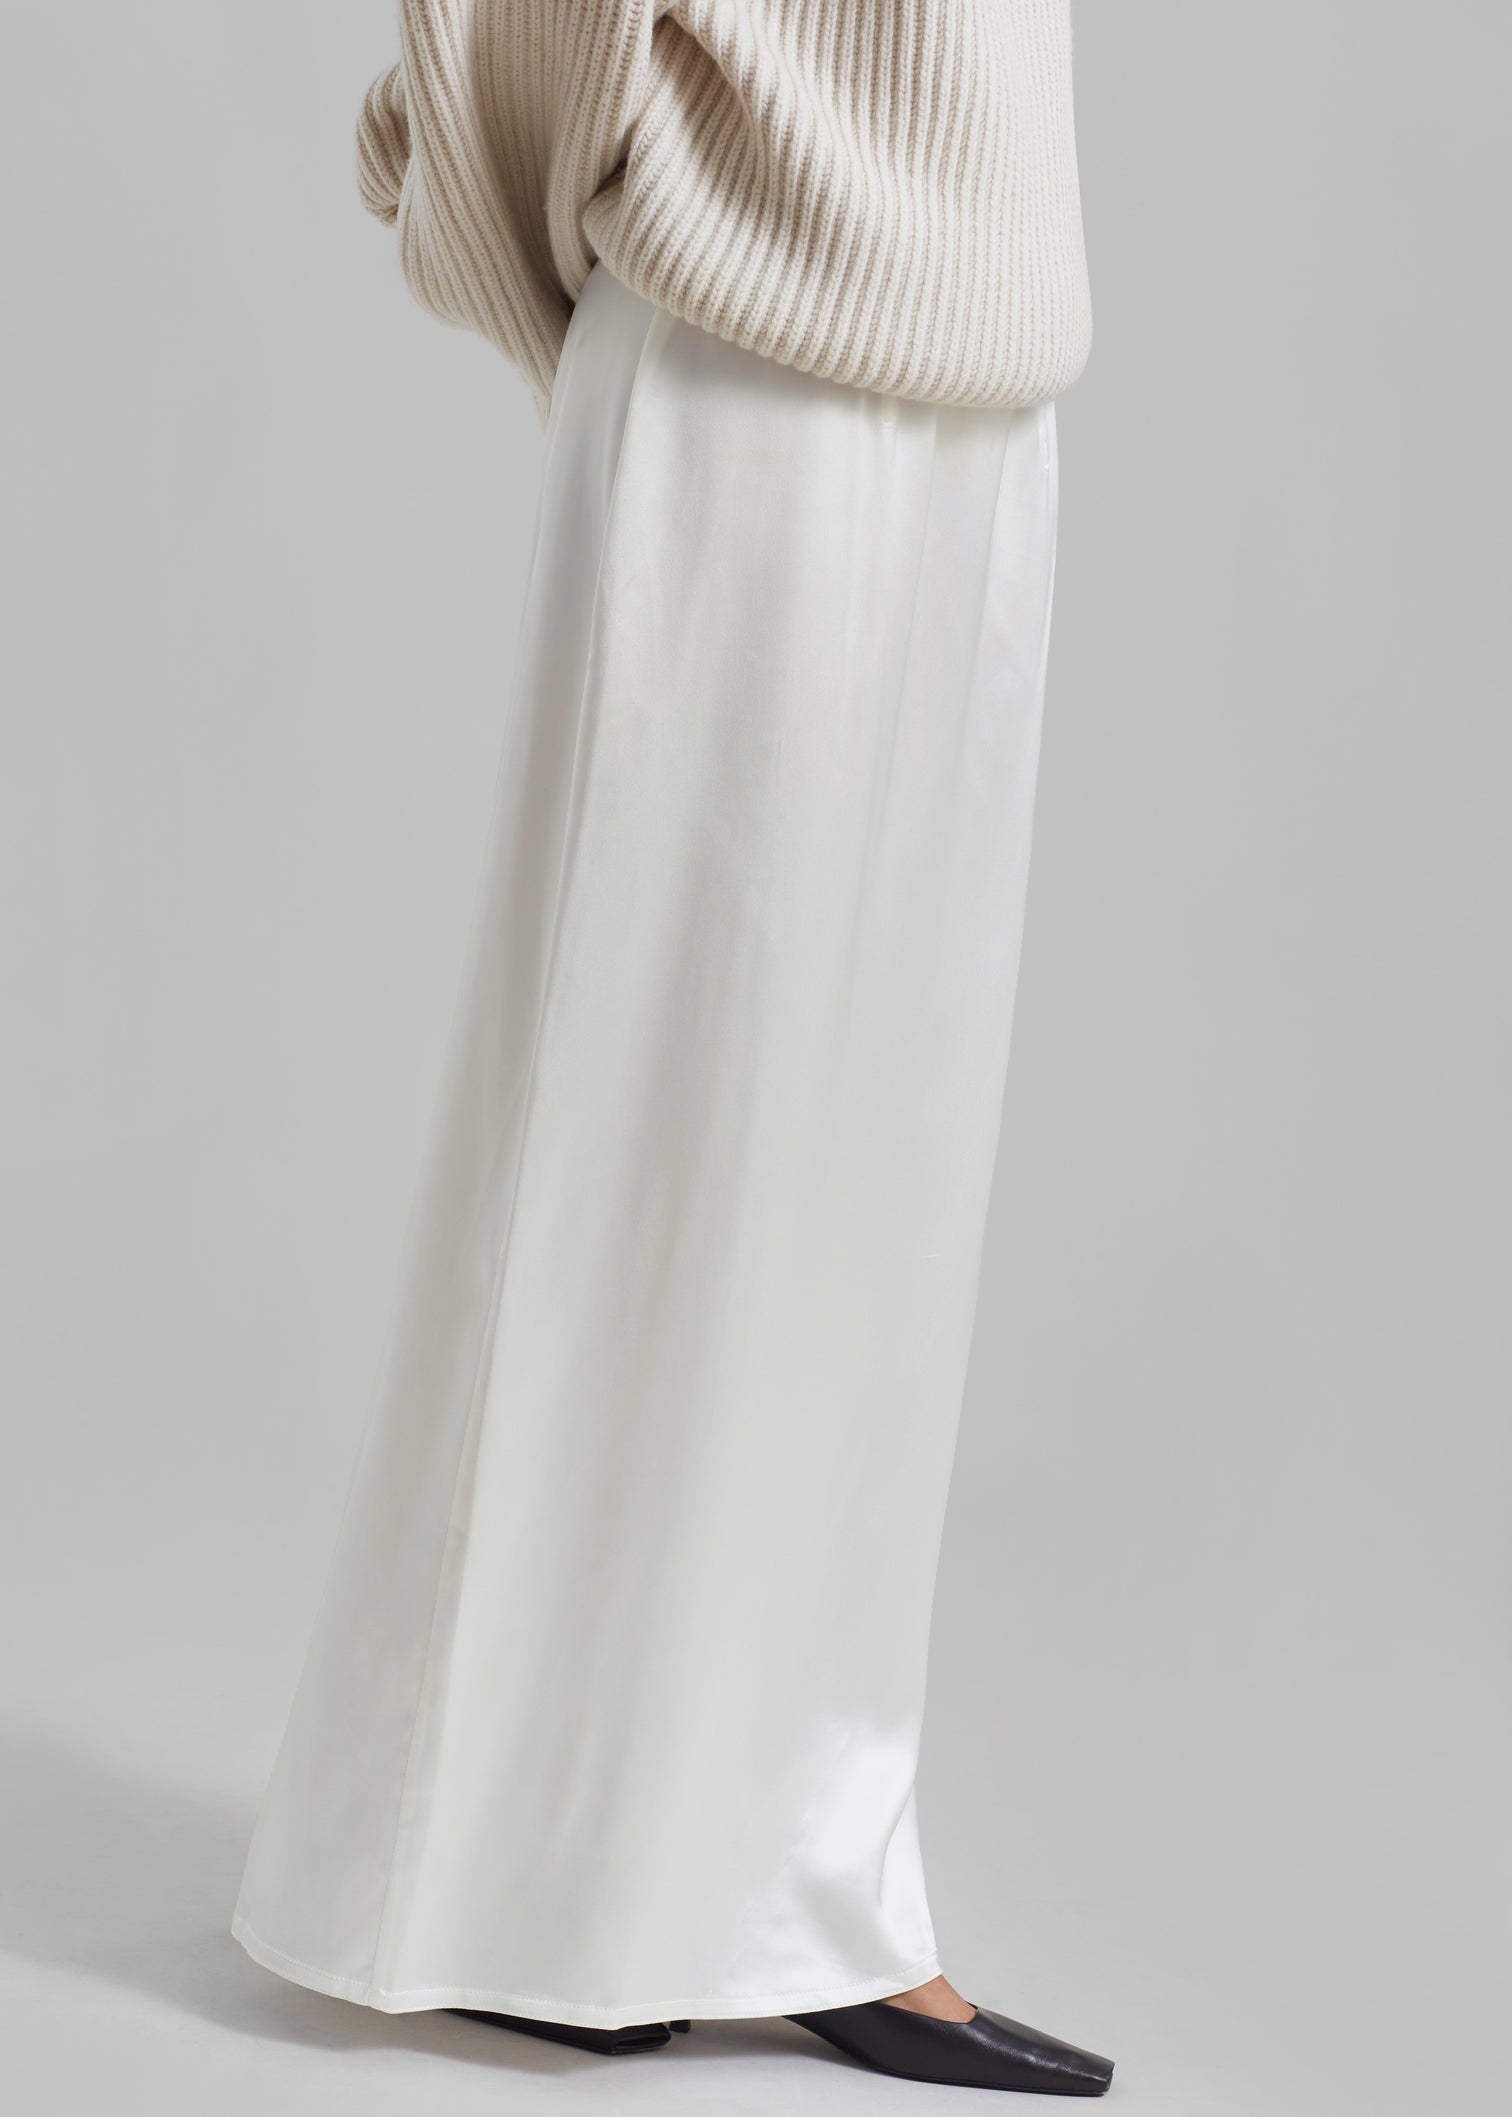 Bevza Ankle Length Skirt in Vanilla